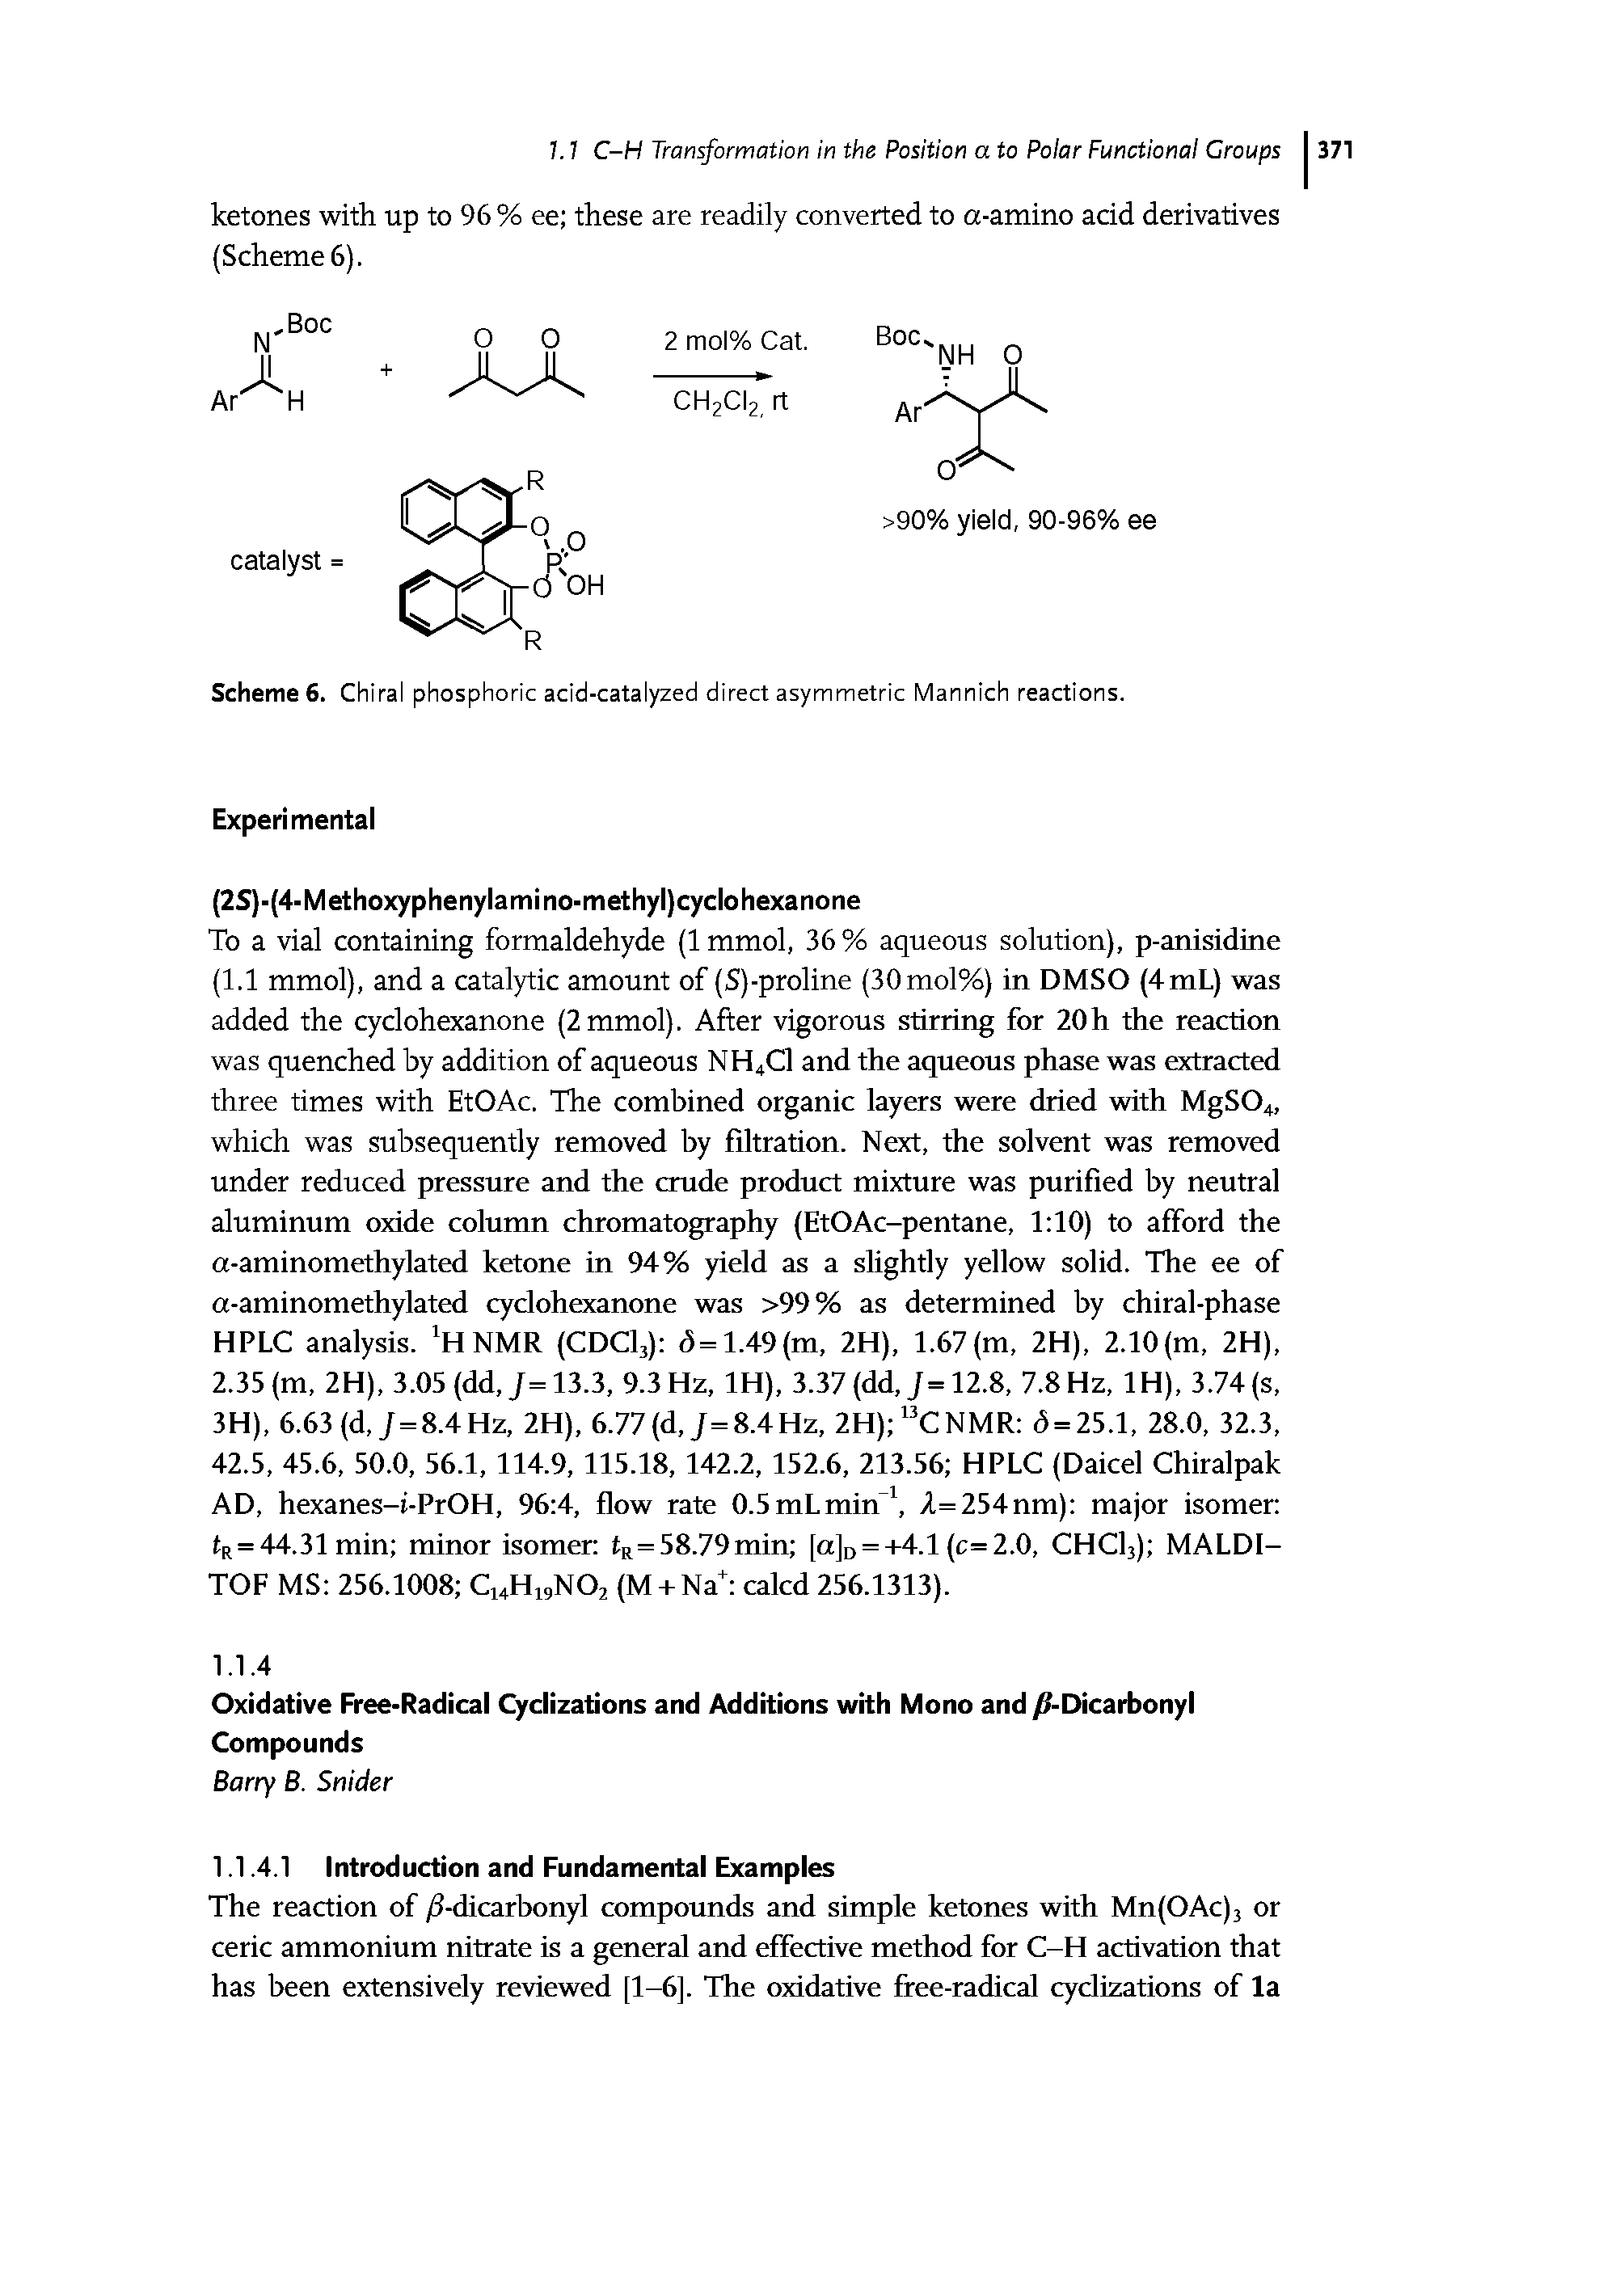 Scheme 6. Chiral phosphoric acid-catalyzed direct asymmetric Mannich reactions.